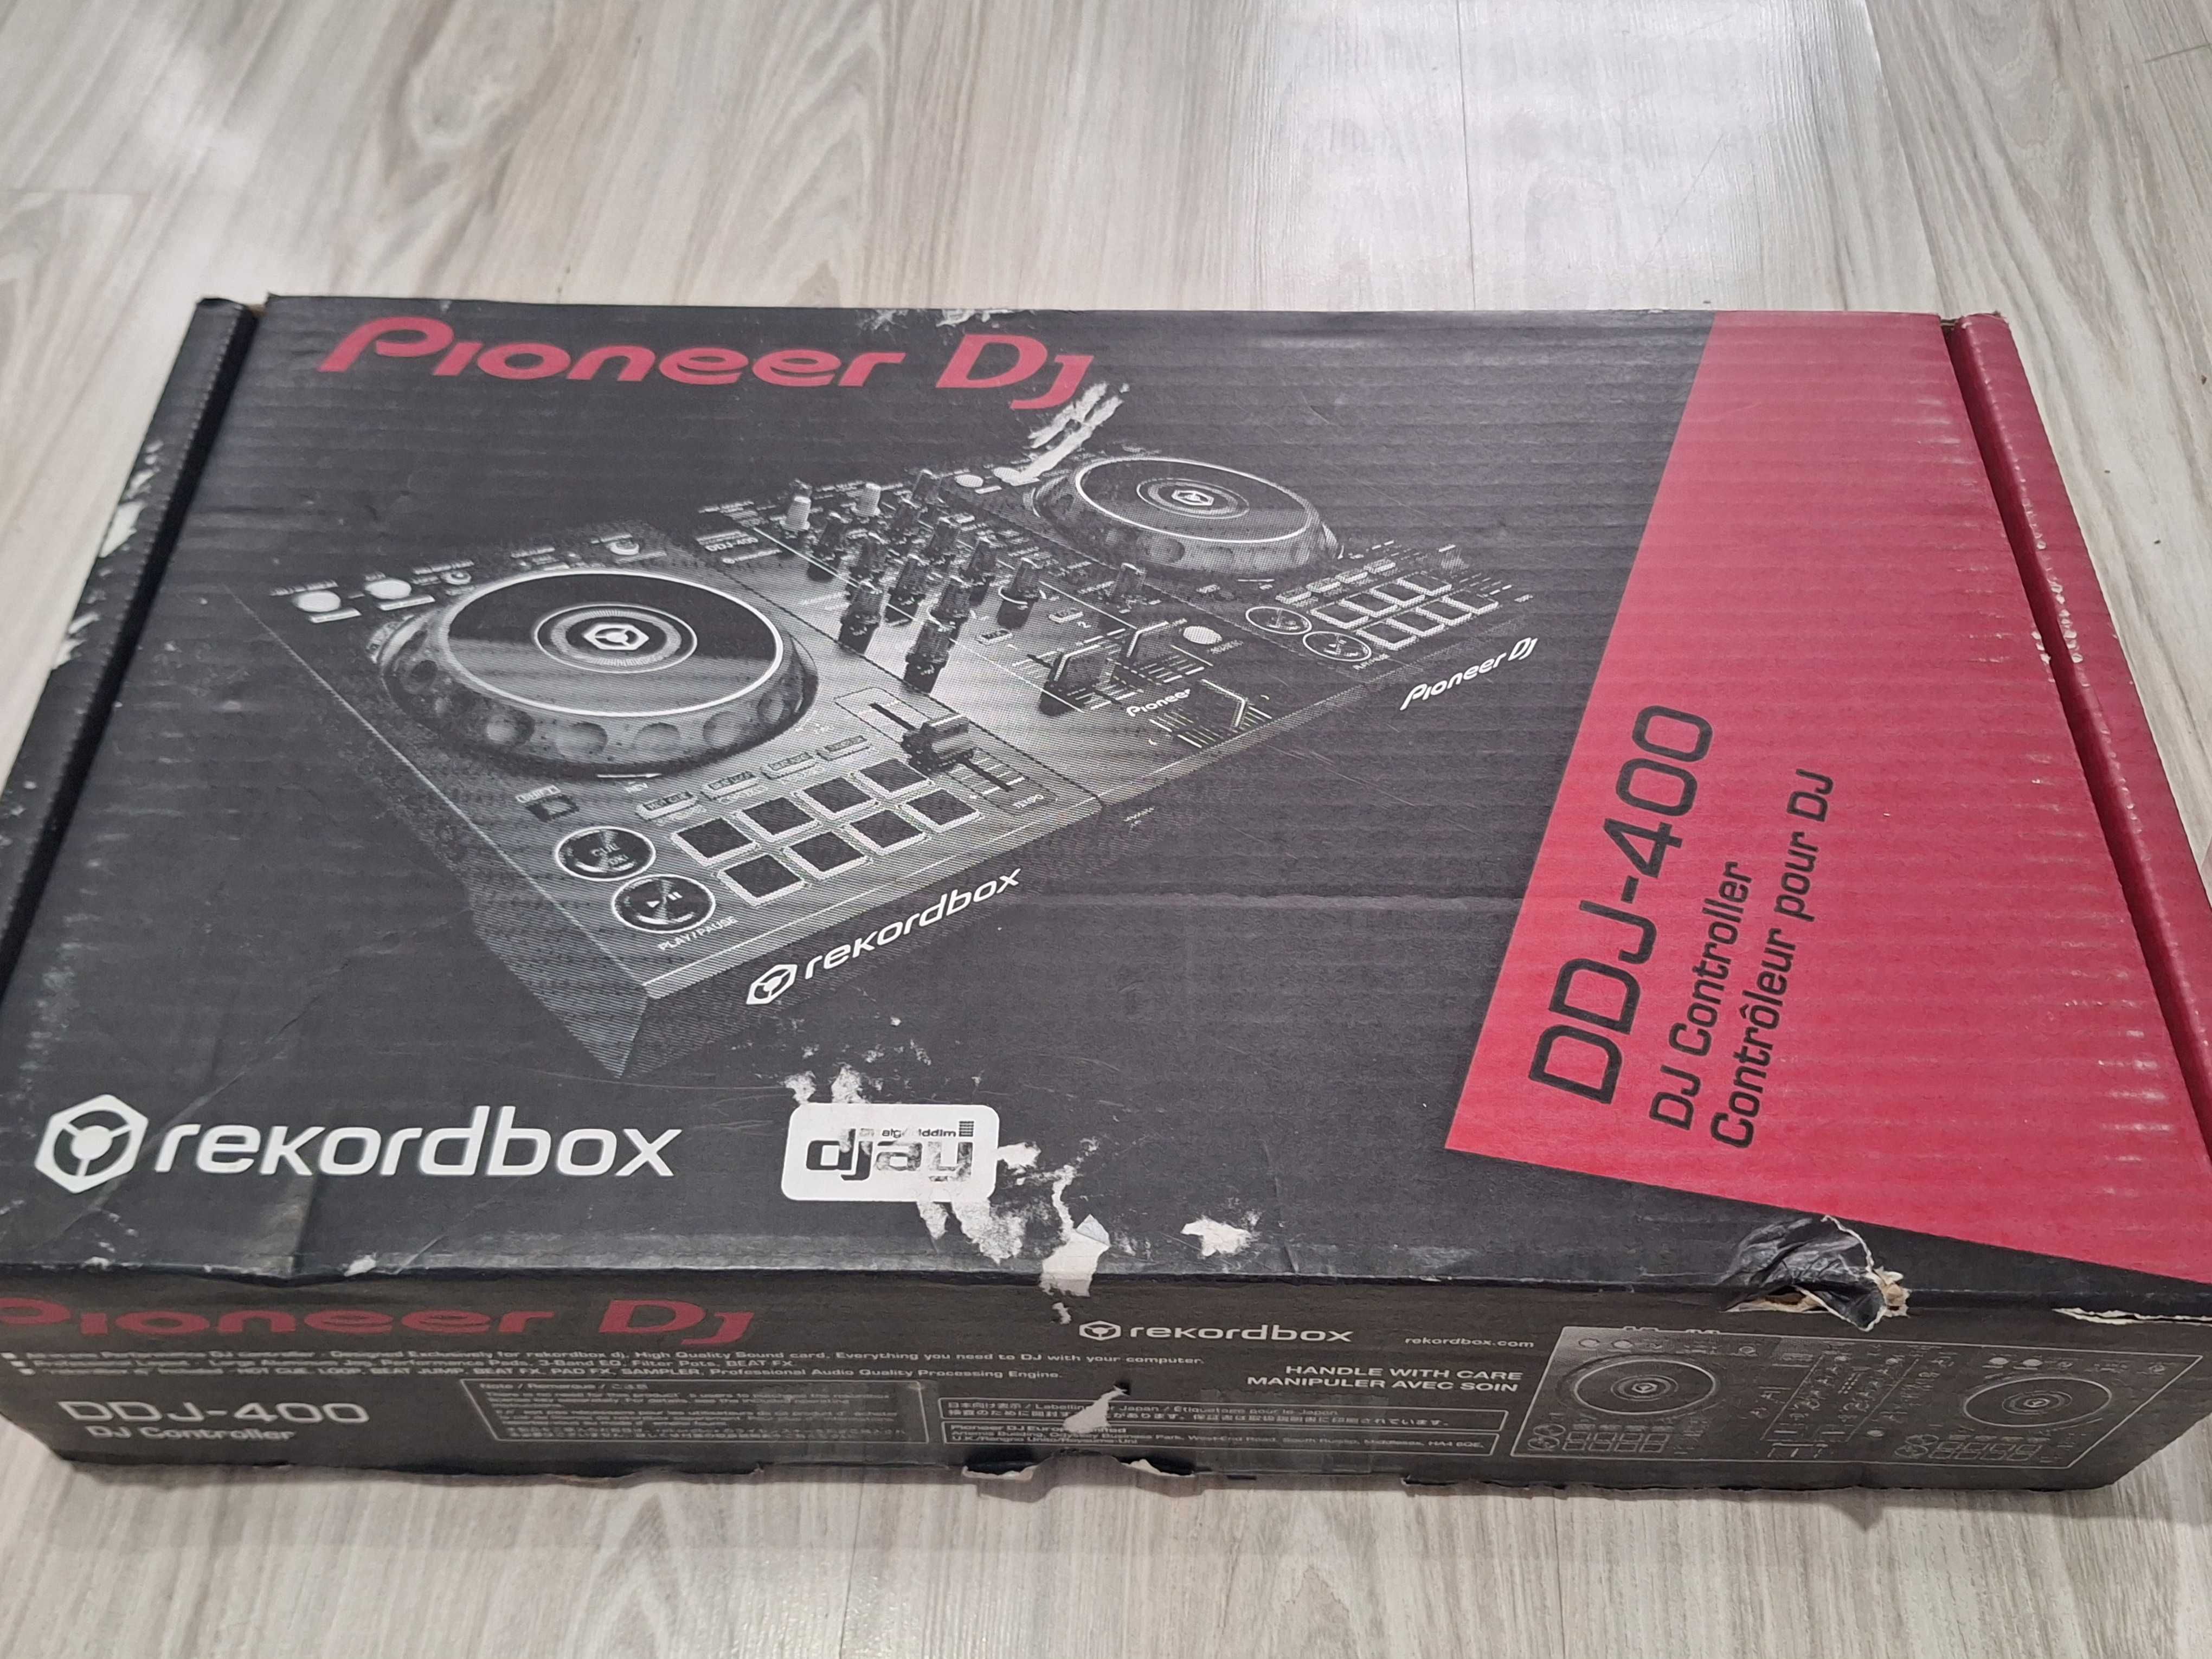 Pionner DDj-400 DJ Controller